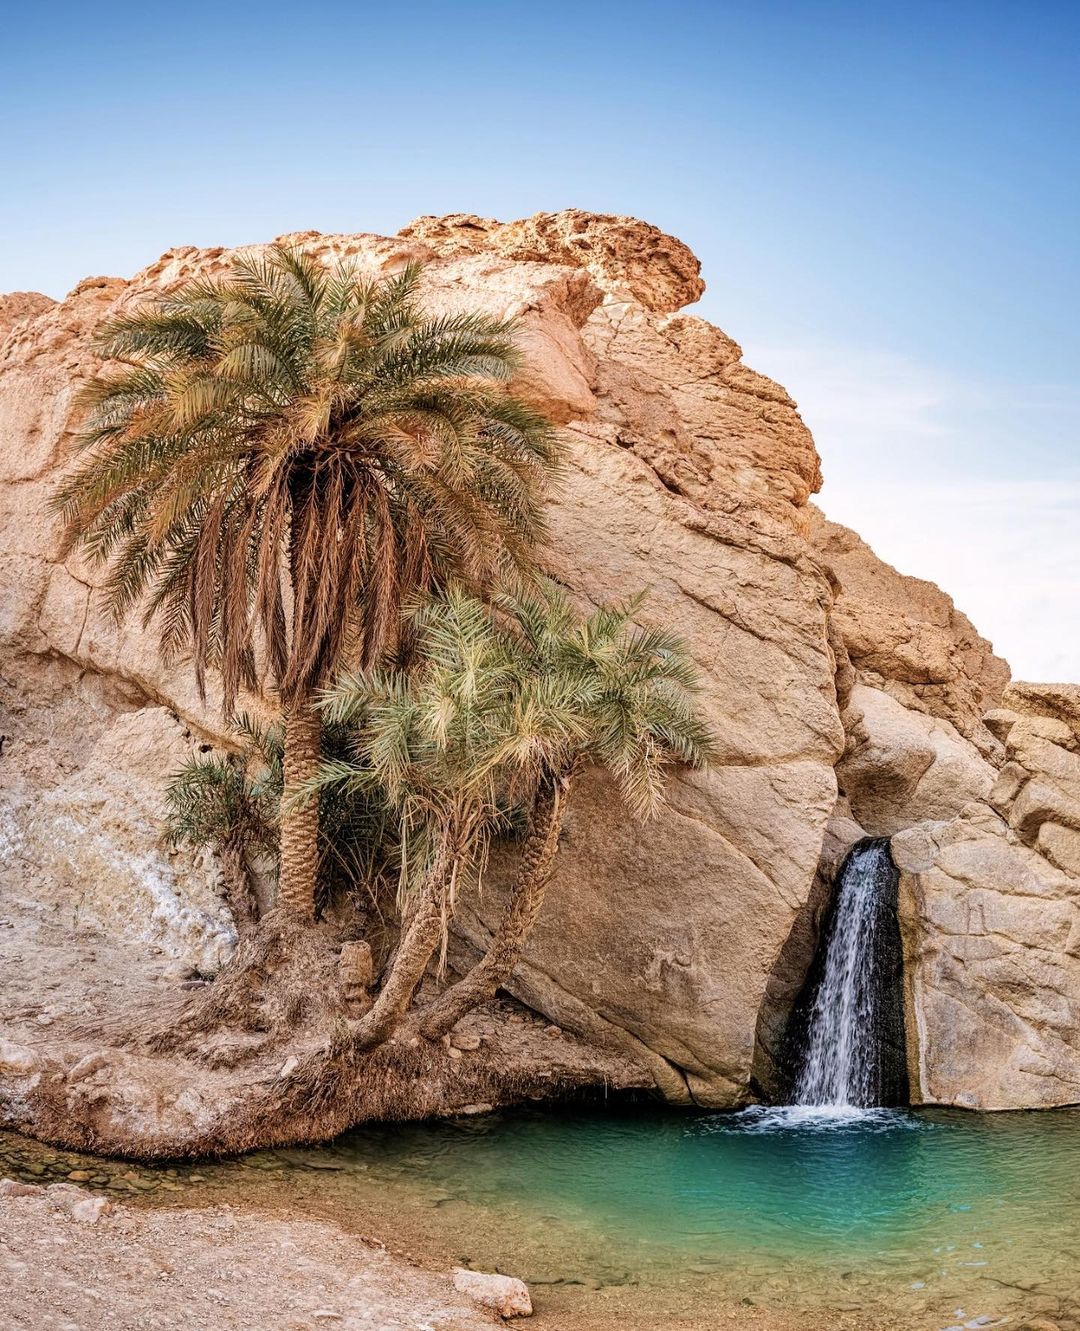 Chebika Oasis - 15 Stunning Places in Tunisia